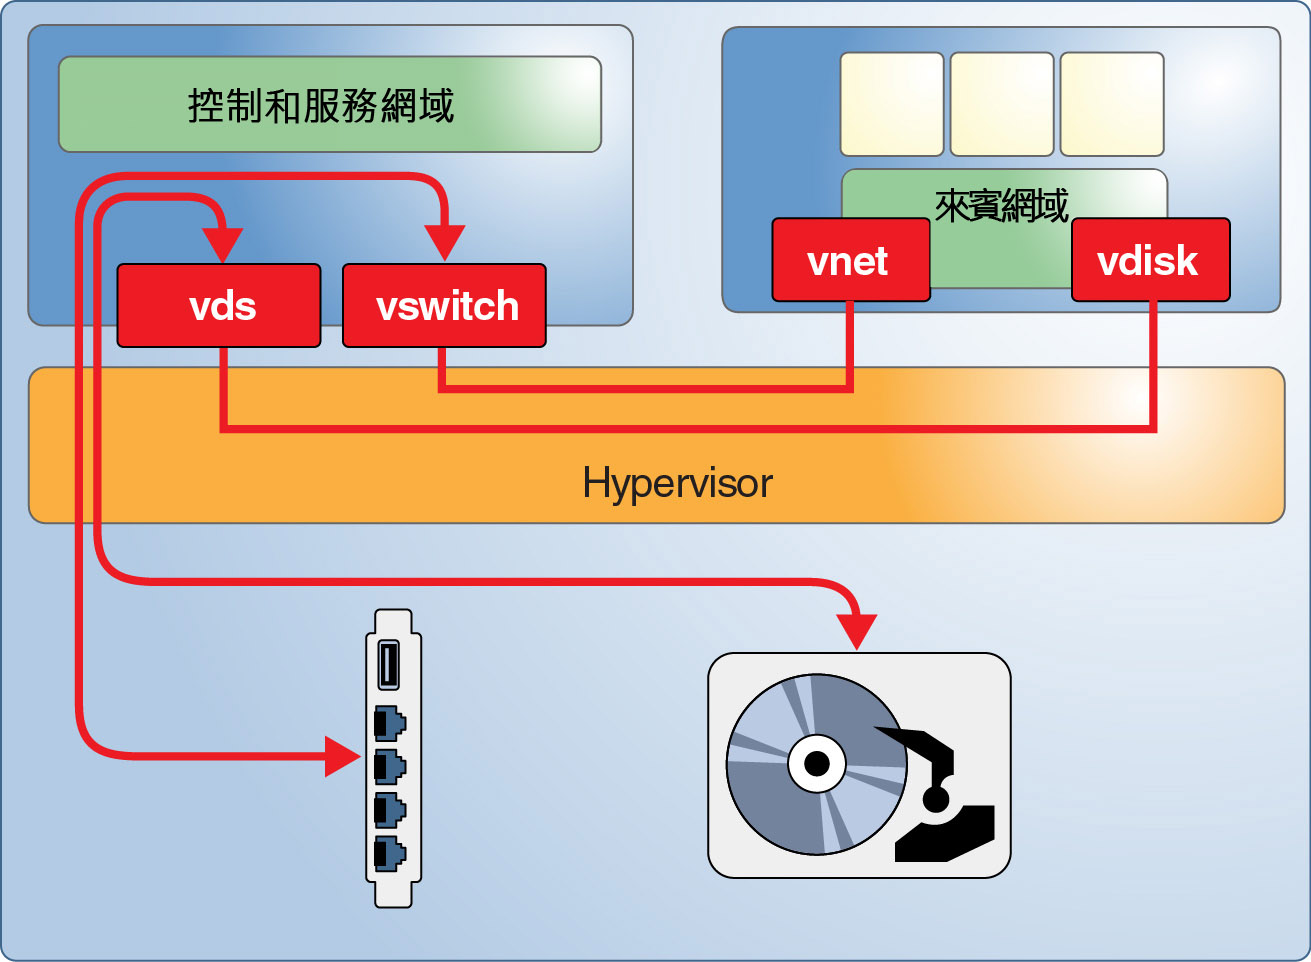 image:此圖形顯示一個通用的 Oracle VM Server for SPARC 環境，其中的控制網域會提供服務與硬體資源給來賓網域。